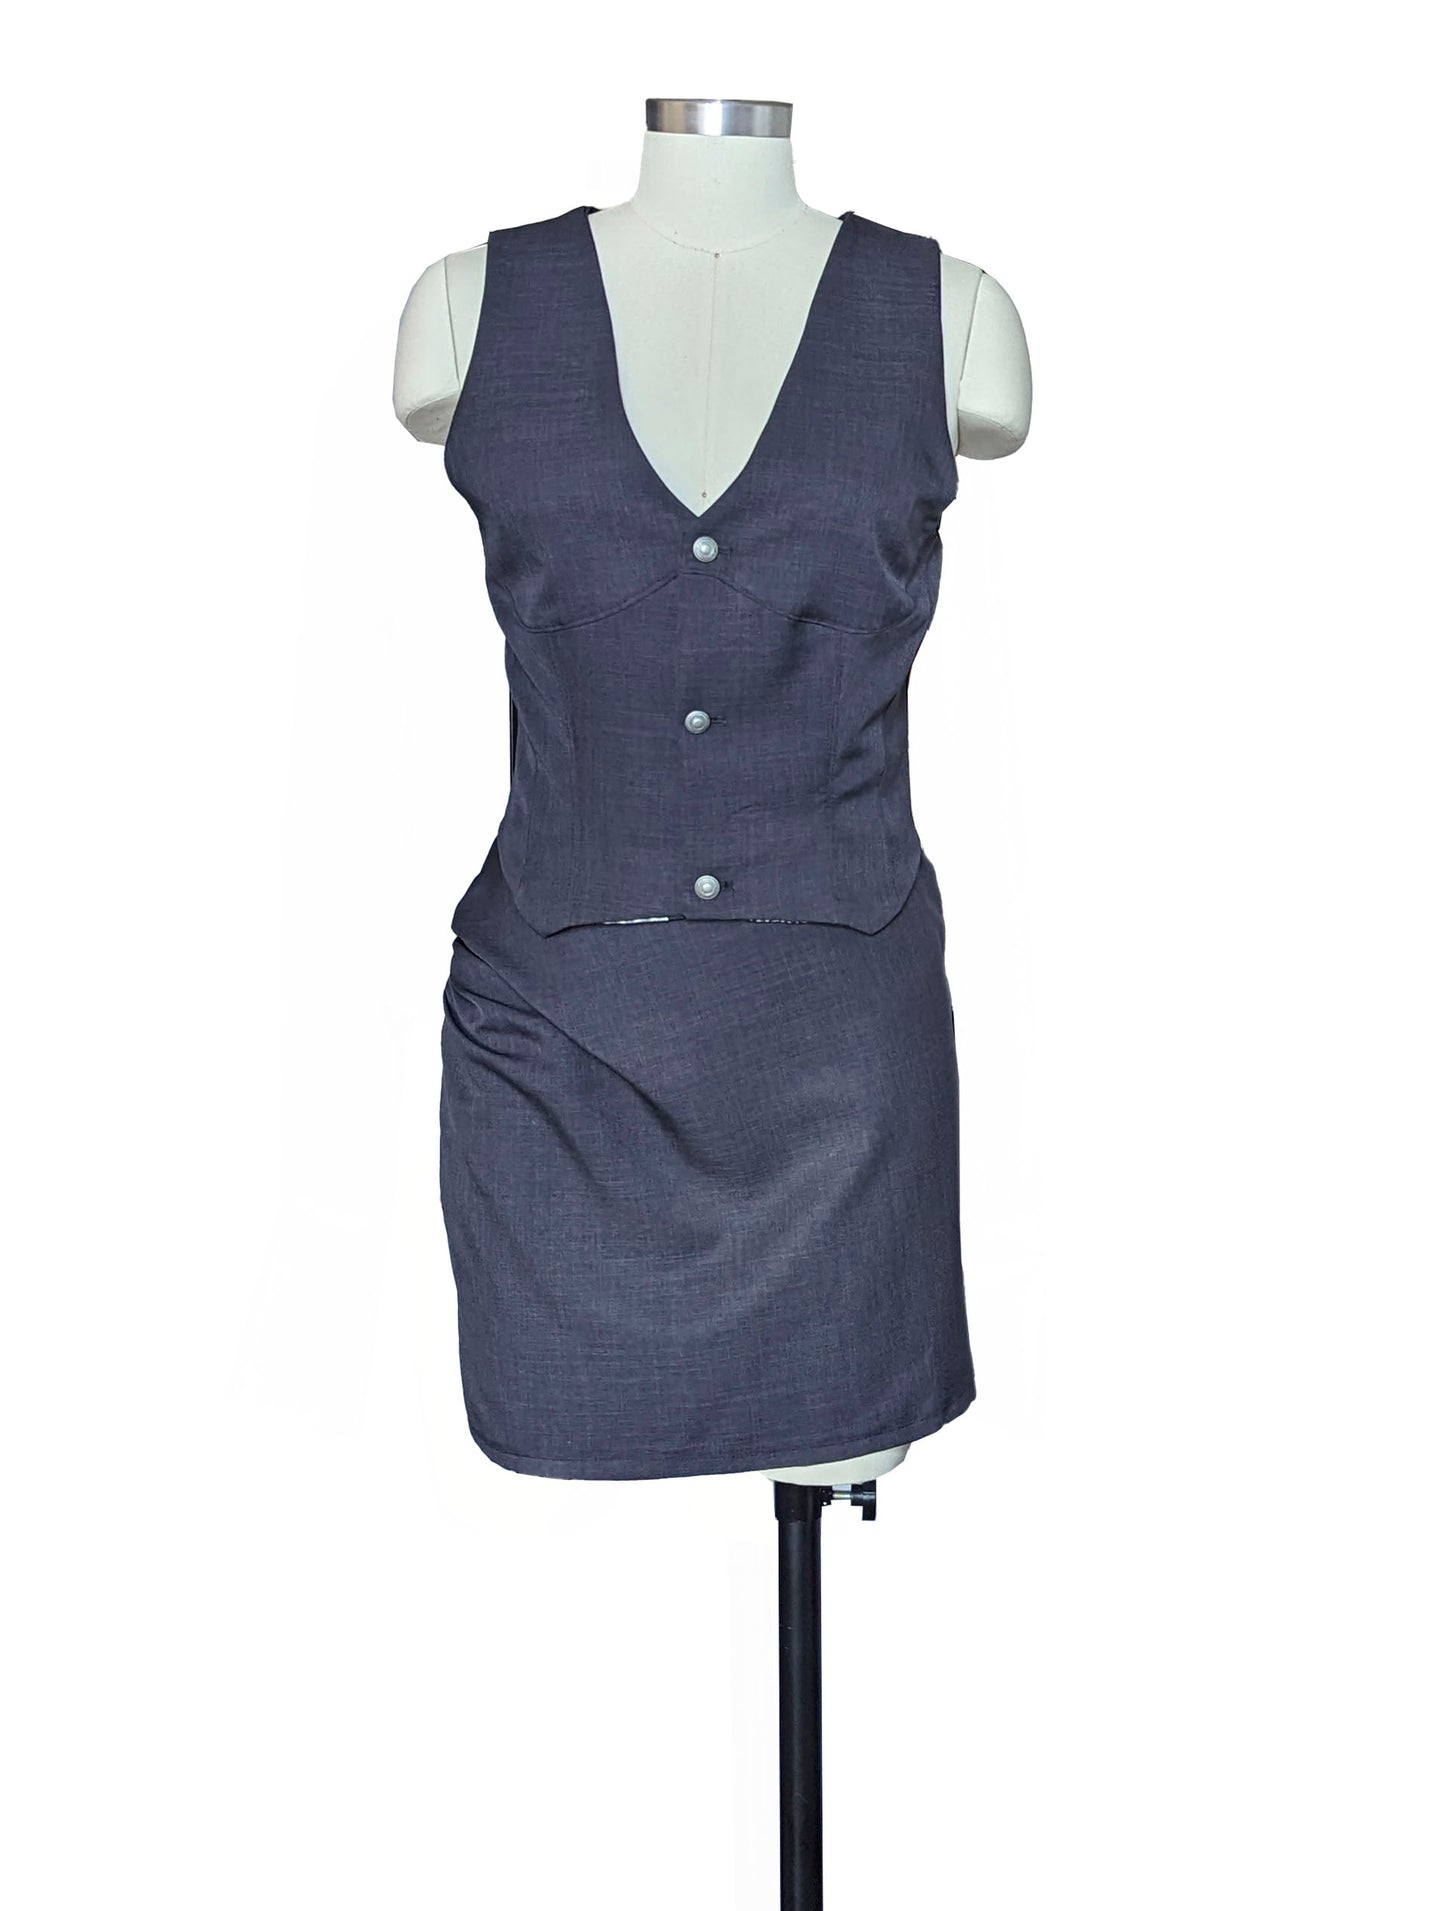 grey vest and skirt set front